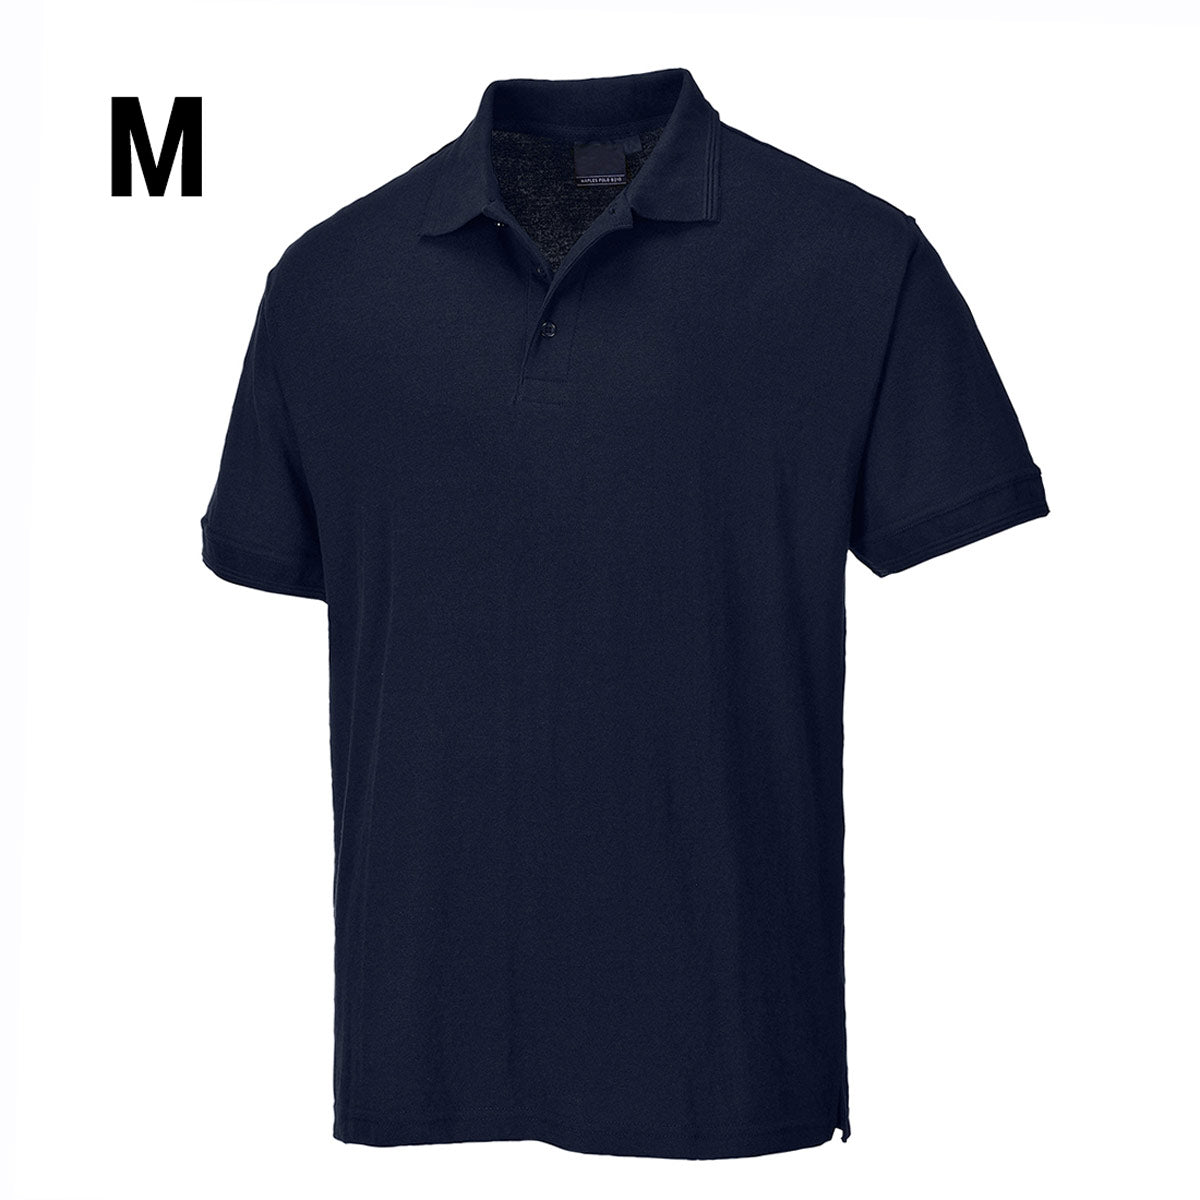 Poloskjorte til mænd - Dark Navy - Størrelse: M